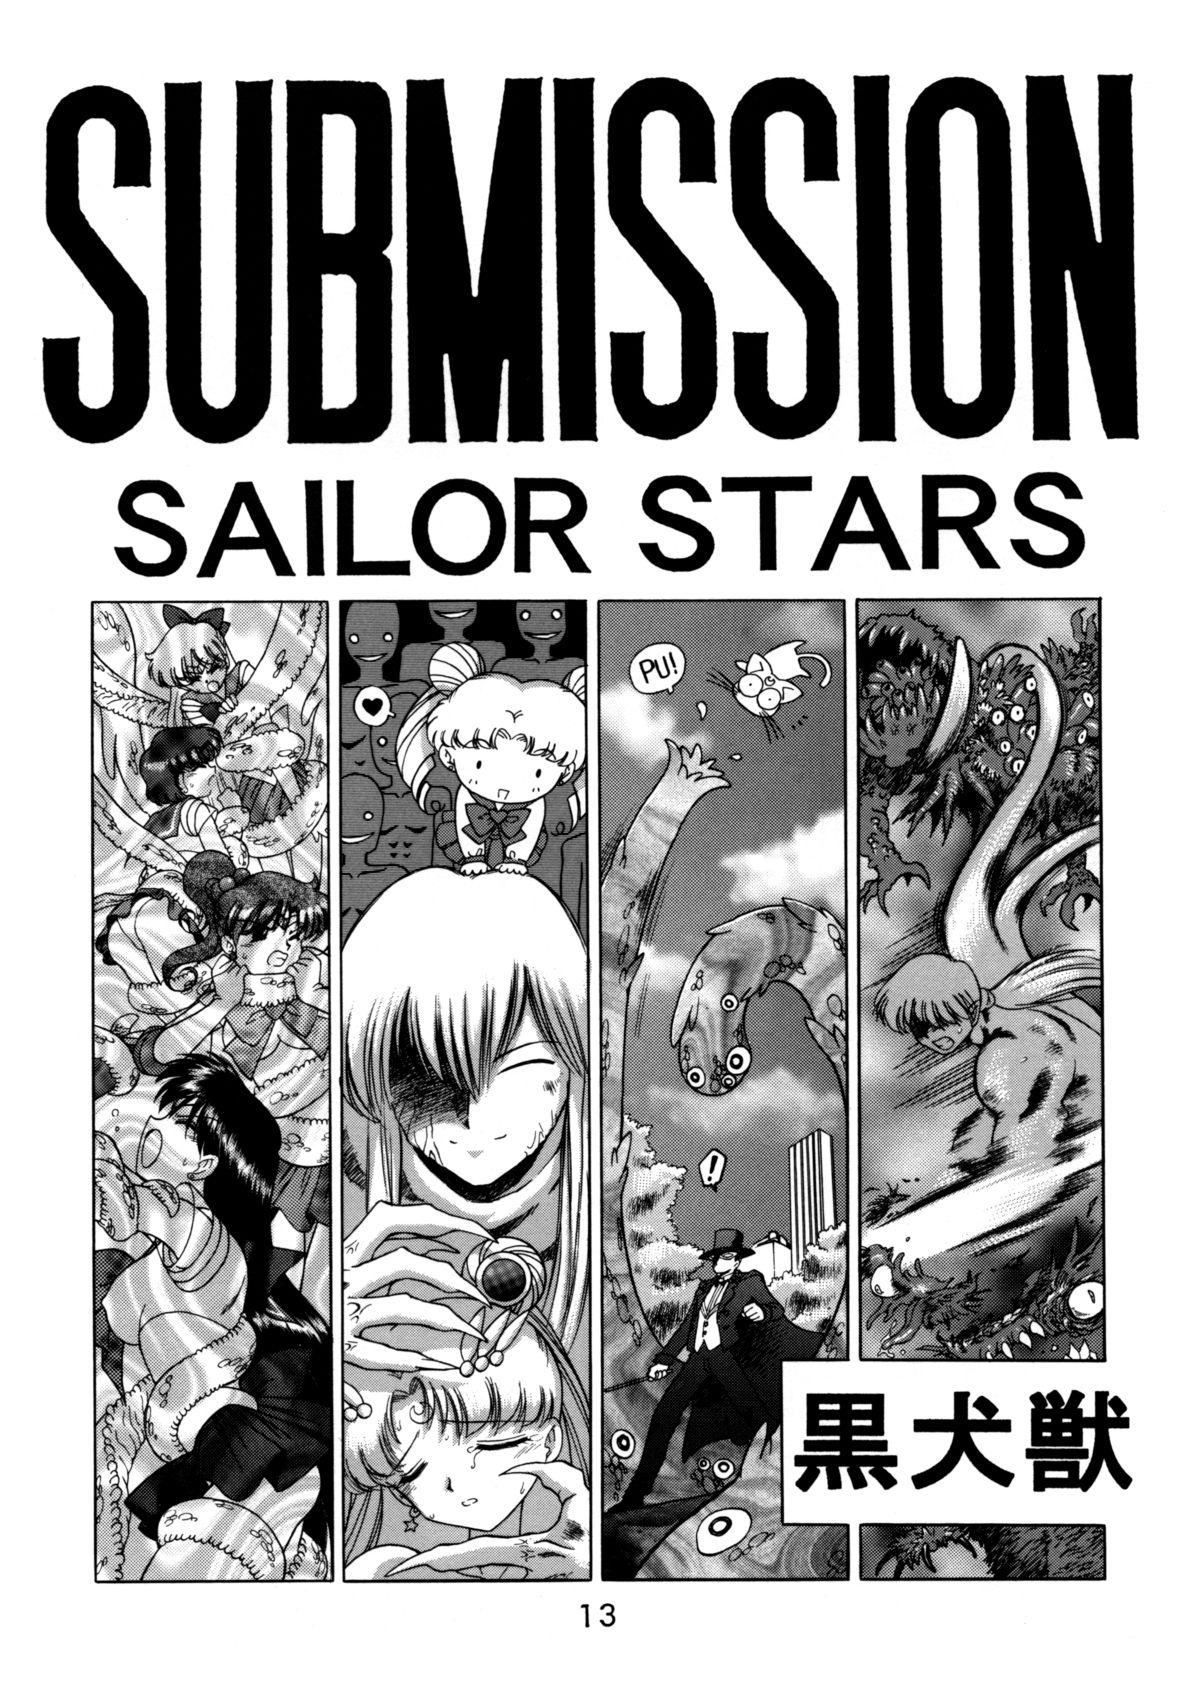 Salope Submission Sailorstars - Sailor moon 18yearsold - Page 12